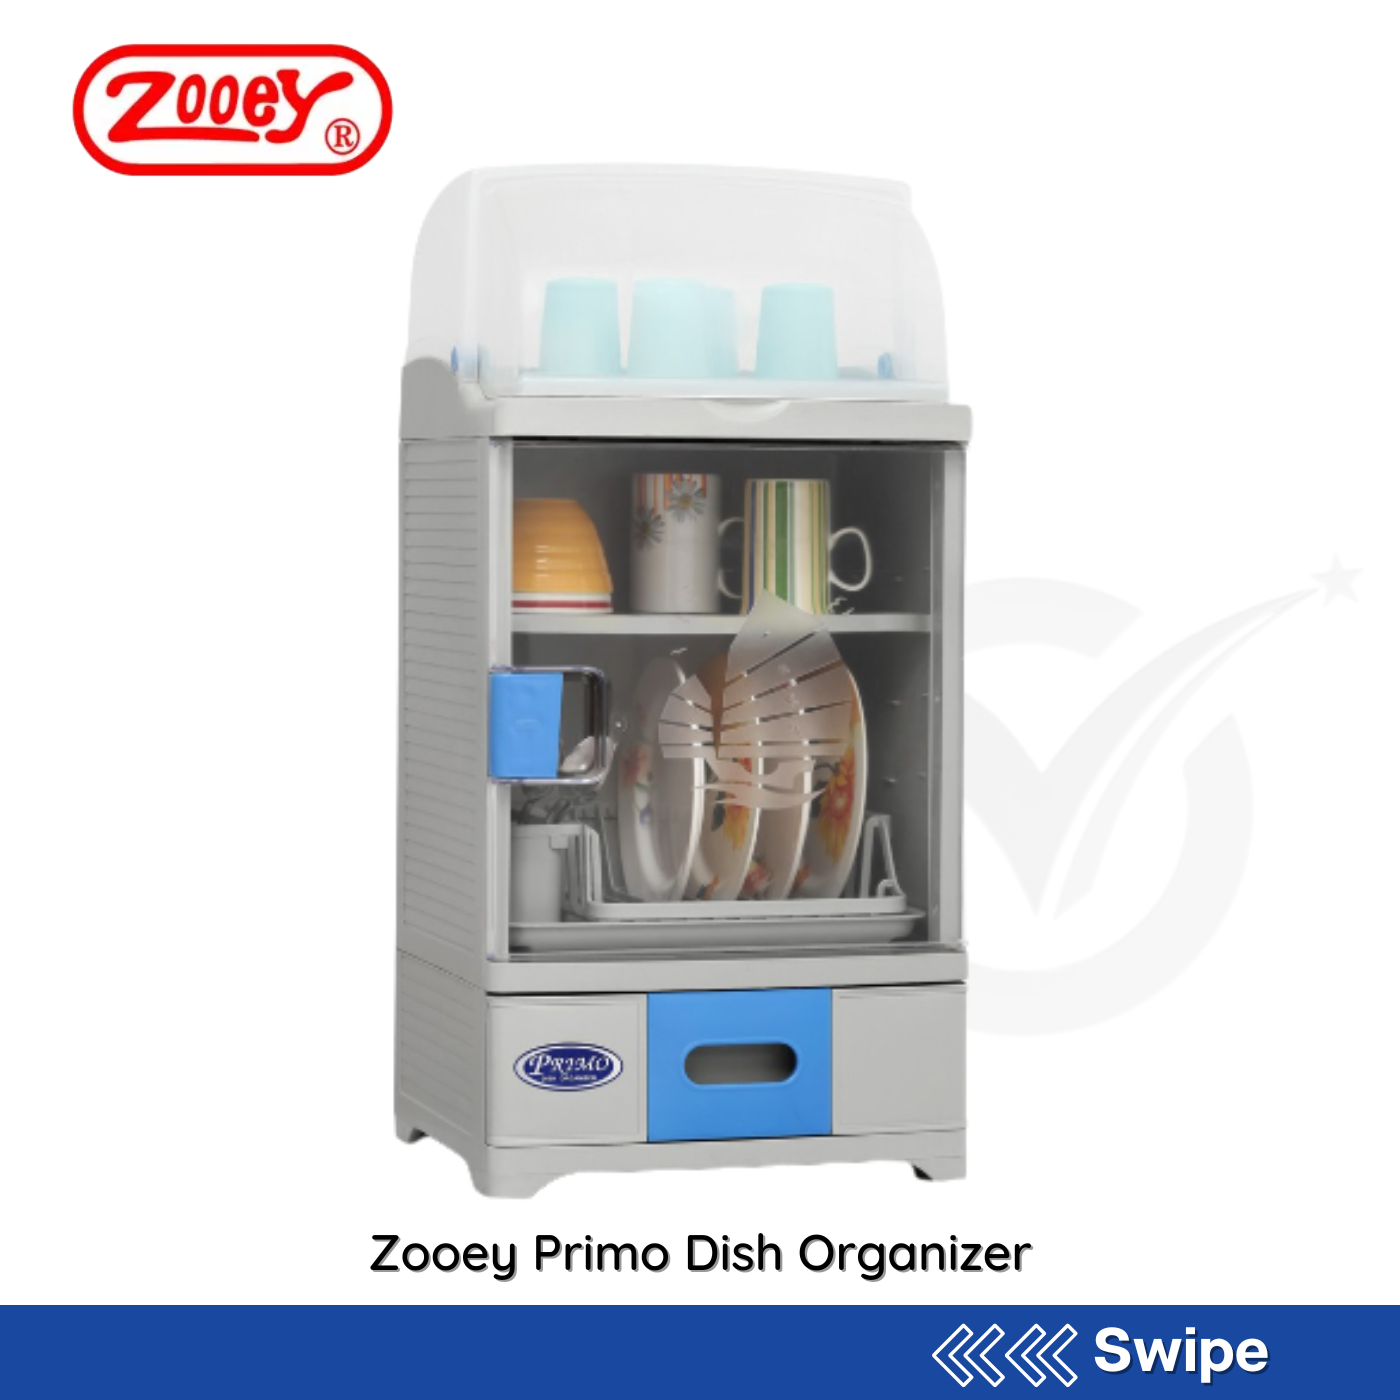 Zooey Primo Dish Organizer - People's Choice Marketing